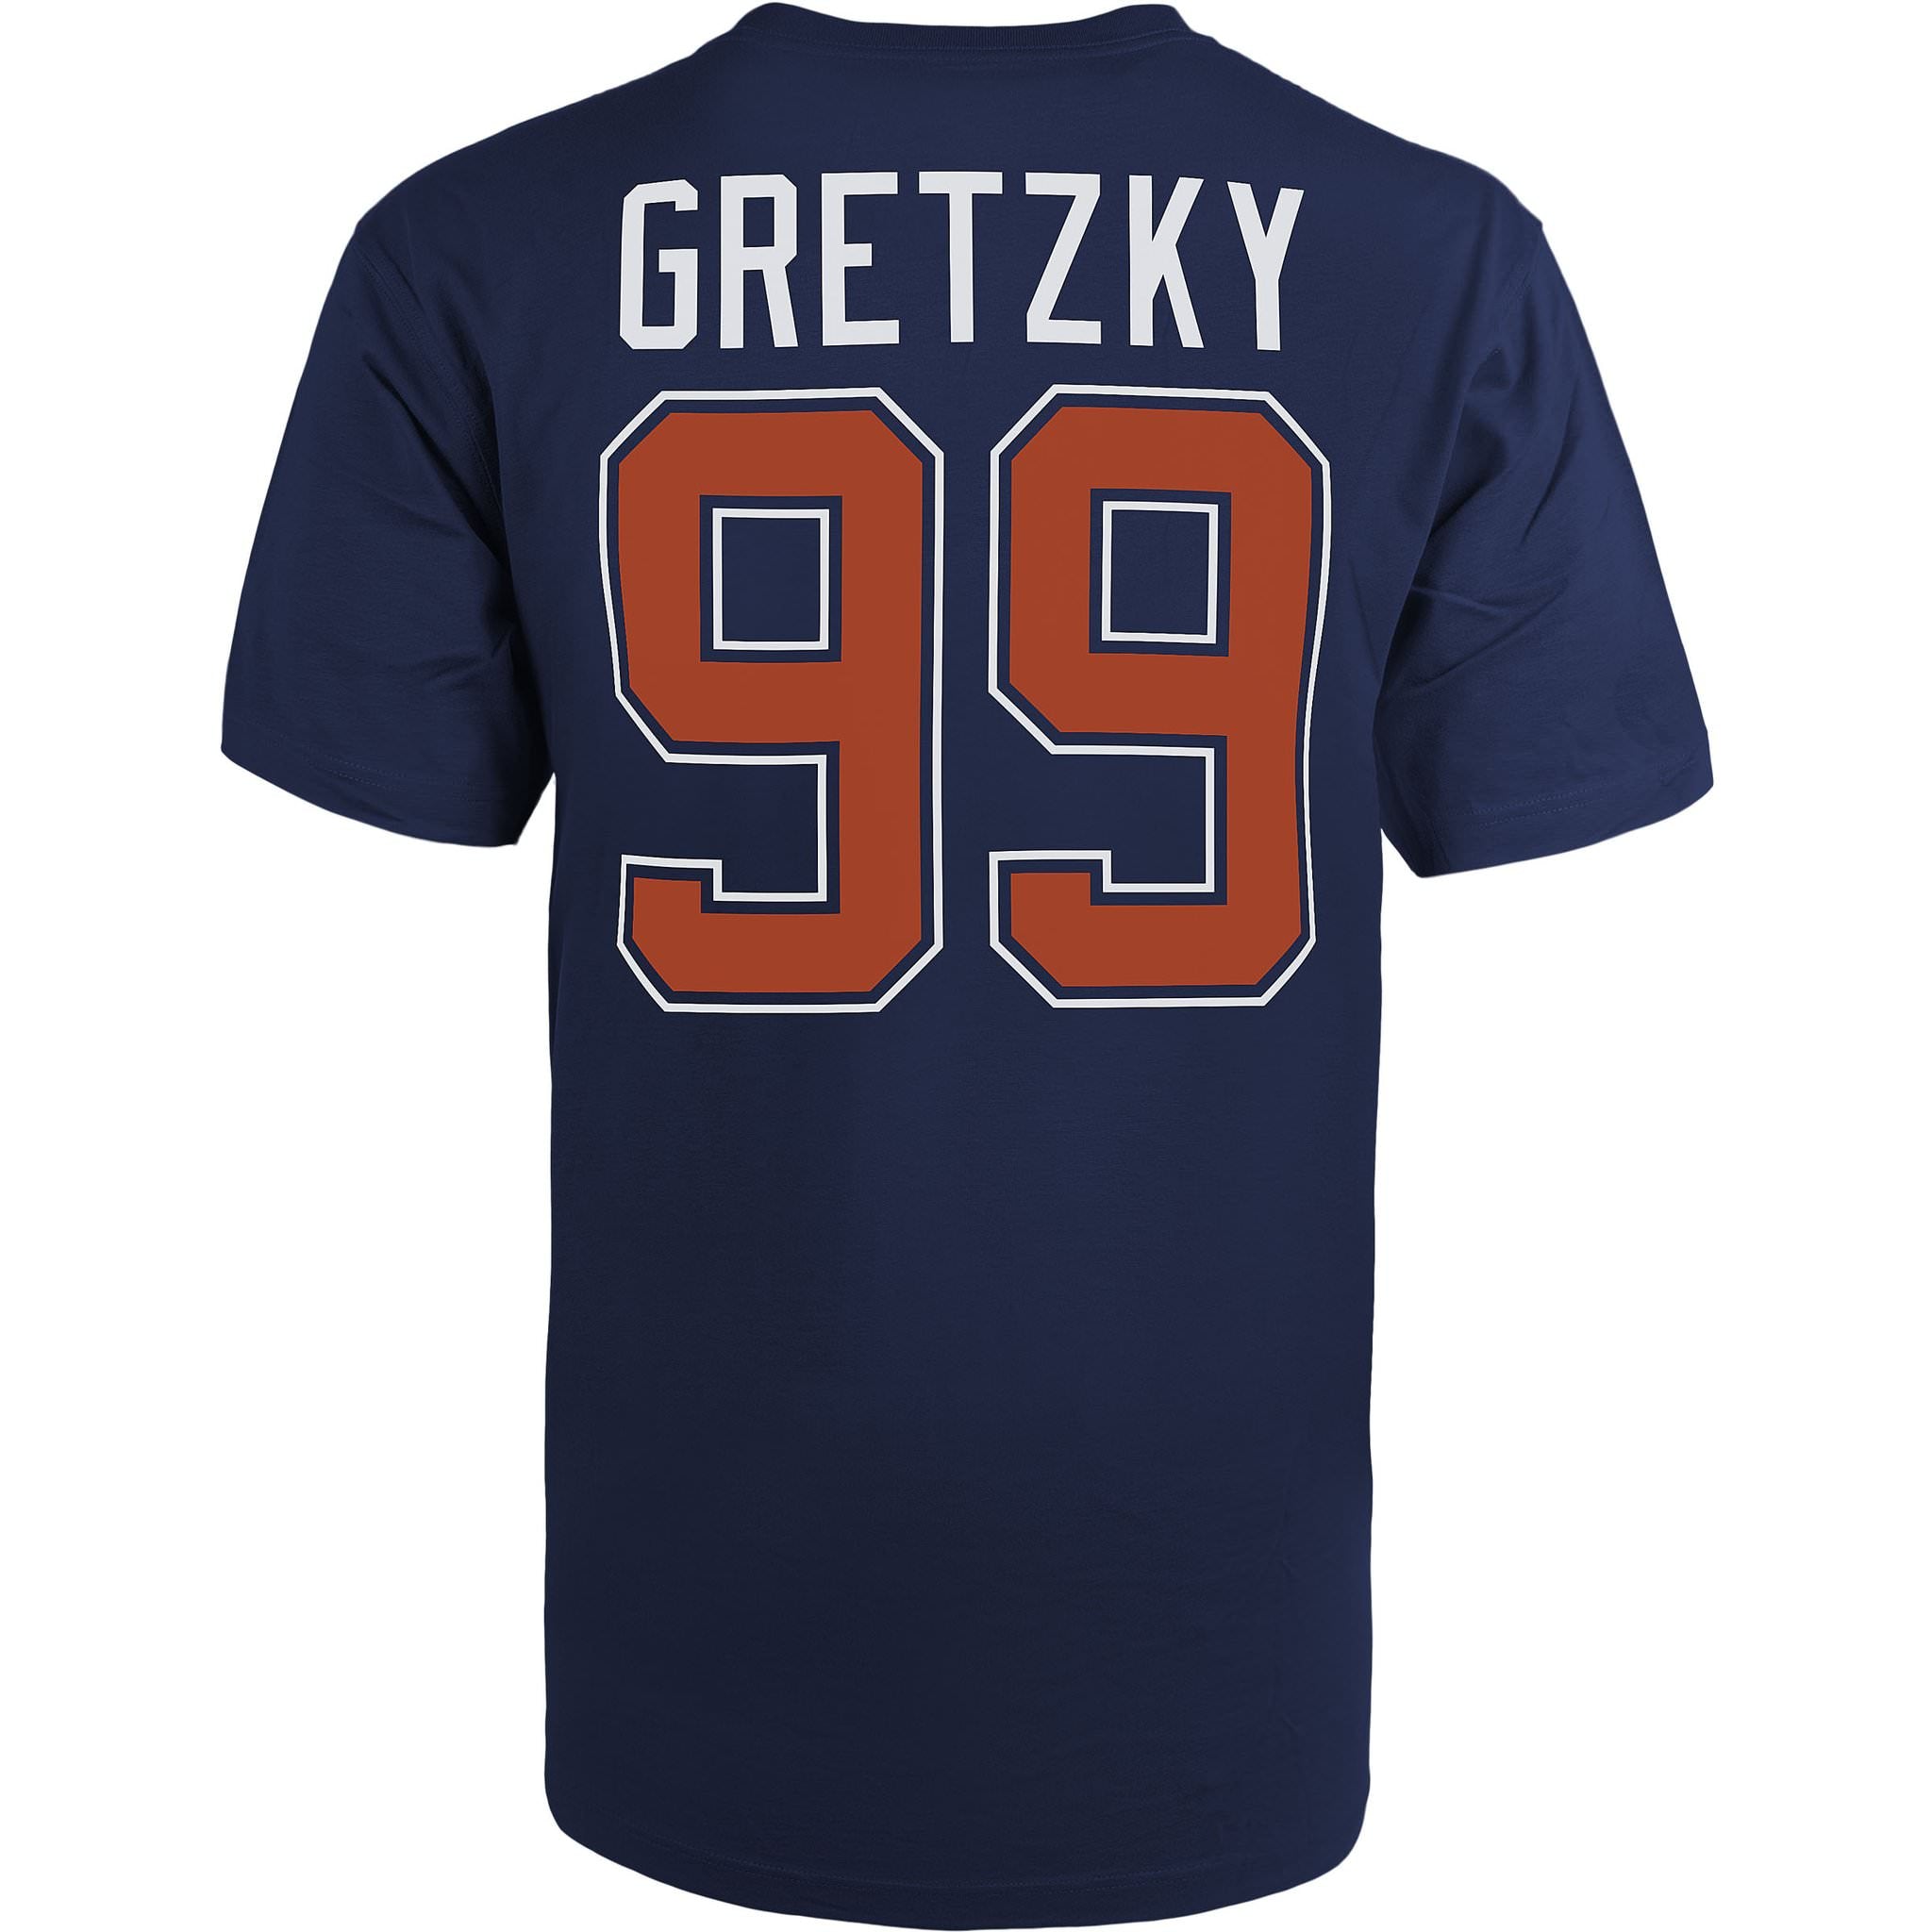 gretzky shirt